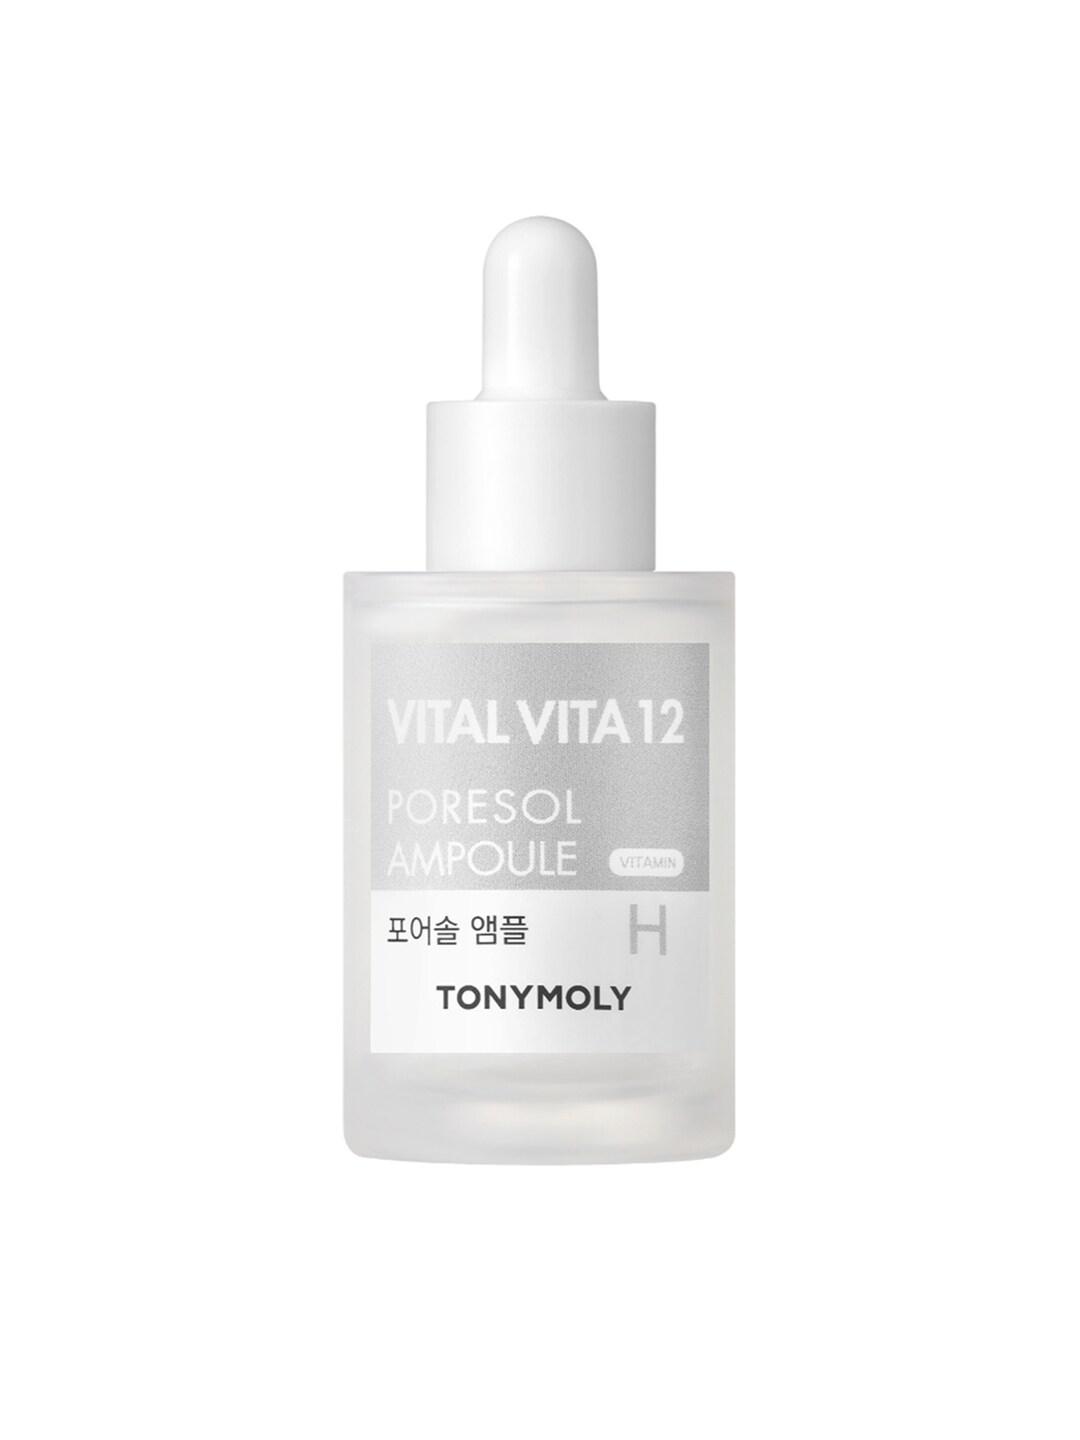 TONYMOLY Vital Vita 12 Vitamin H Poresol Ampoule 30ml